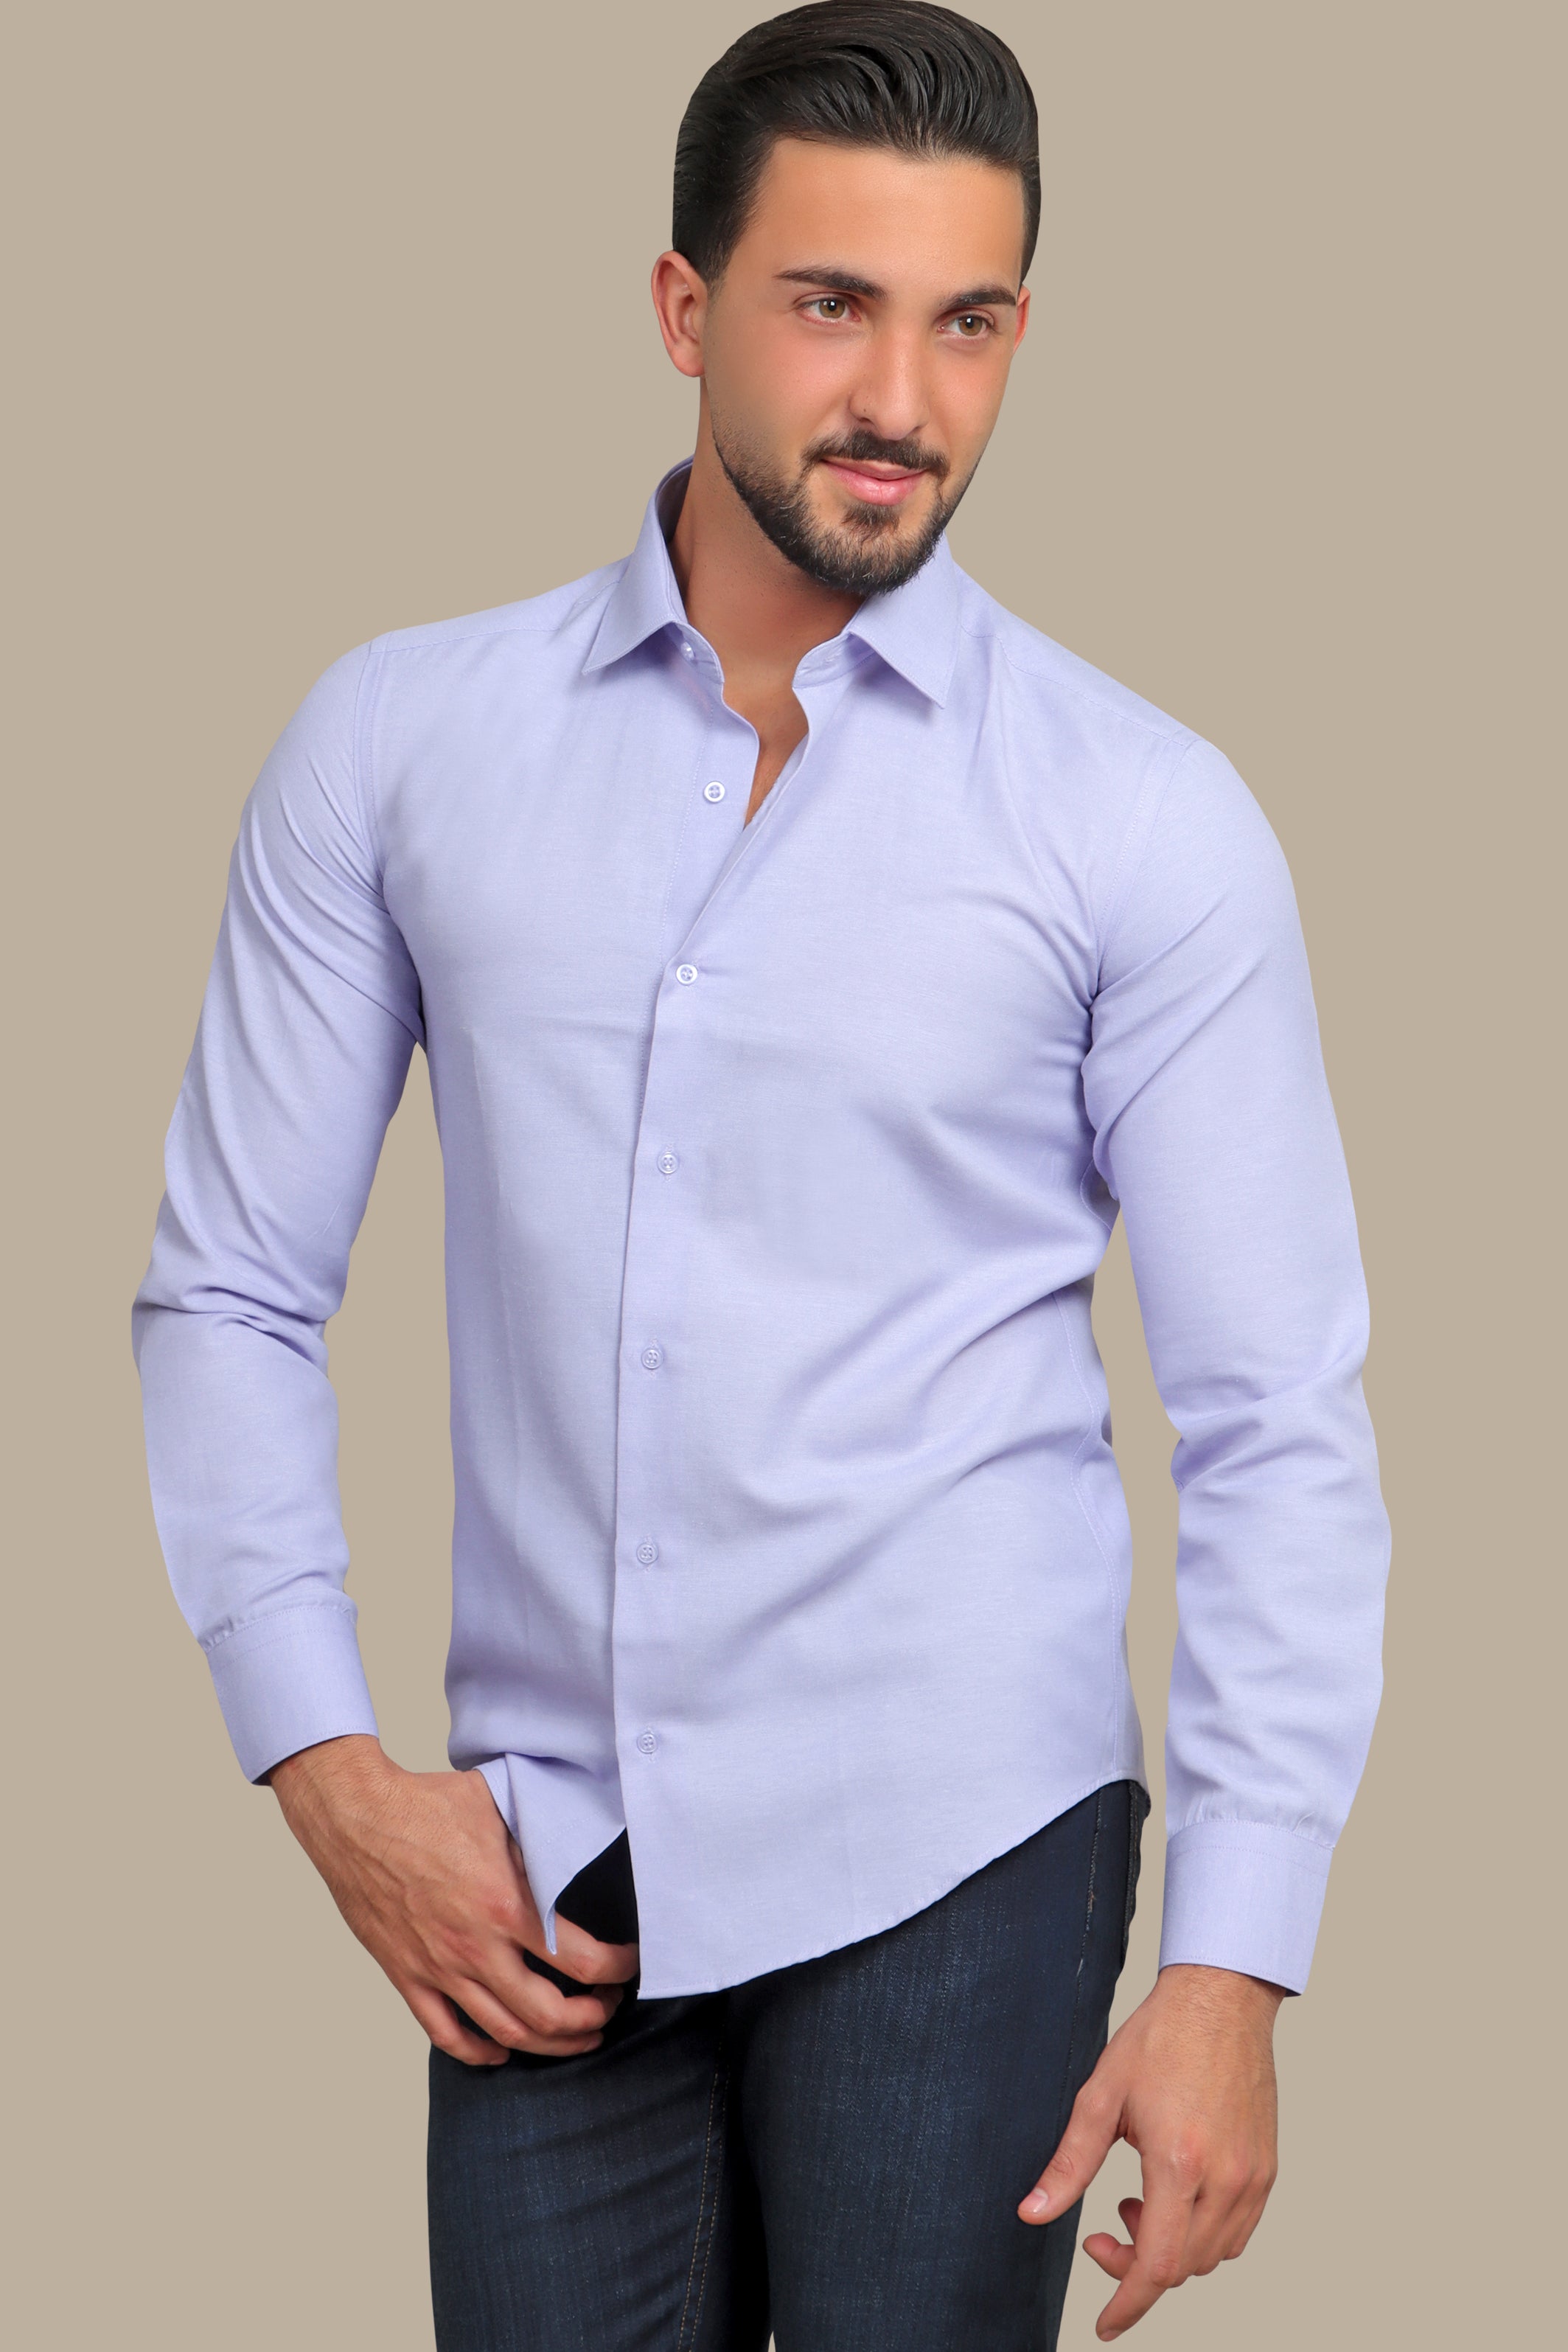 Regal Elegance: Purple Chambray Slim Fit Shirt for Distinctive Style